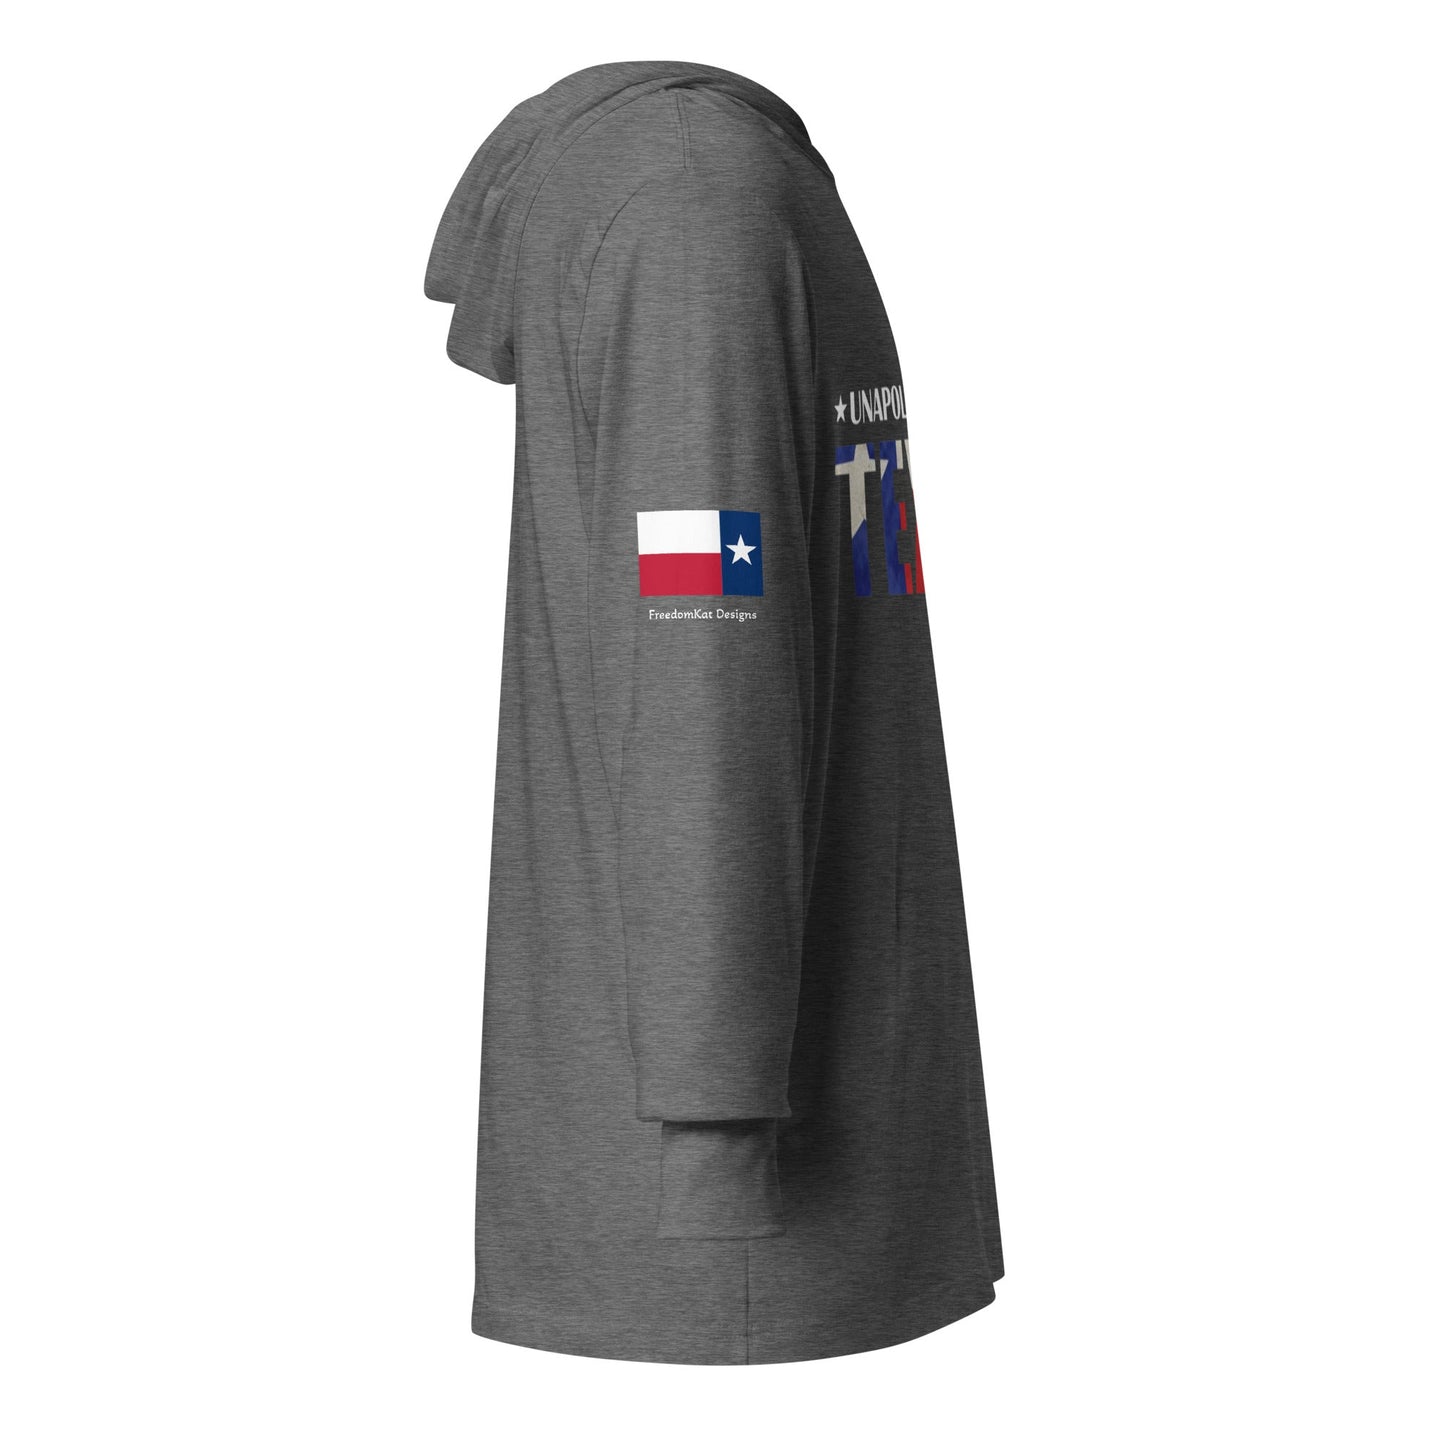 FreedomKat Designs, LLC Unapologetically Texan Hooded long-sleeve tee